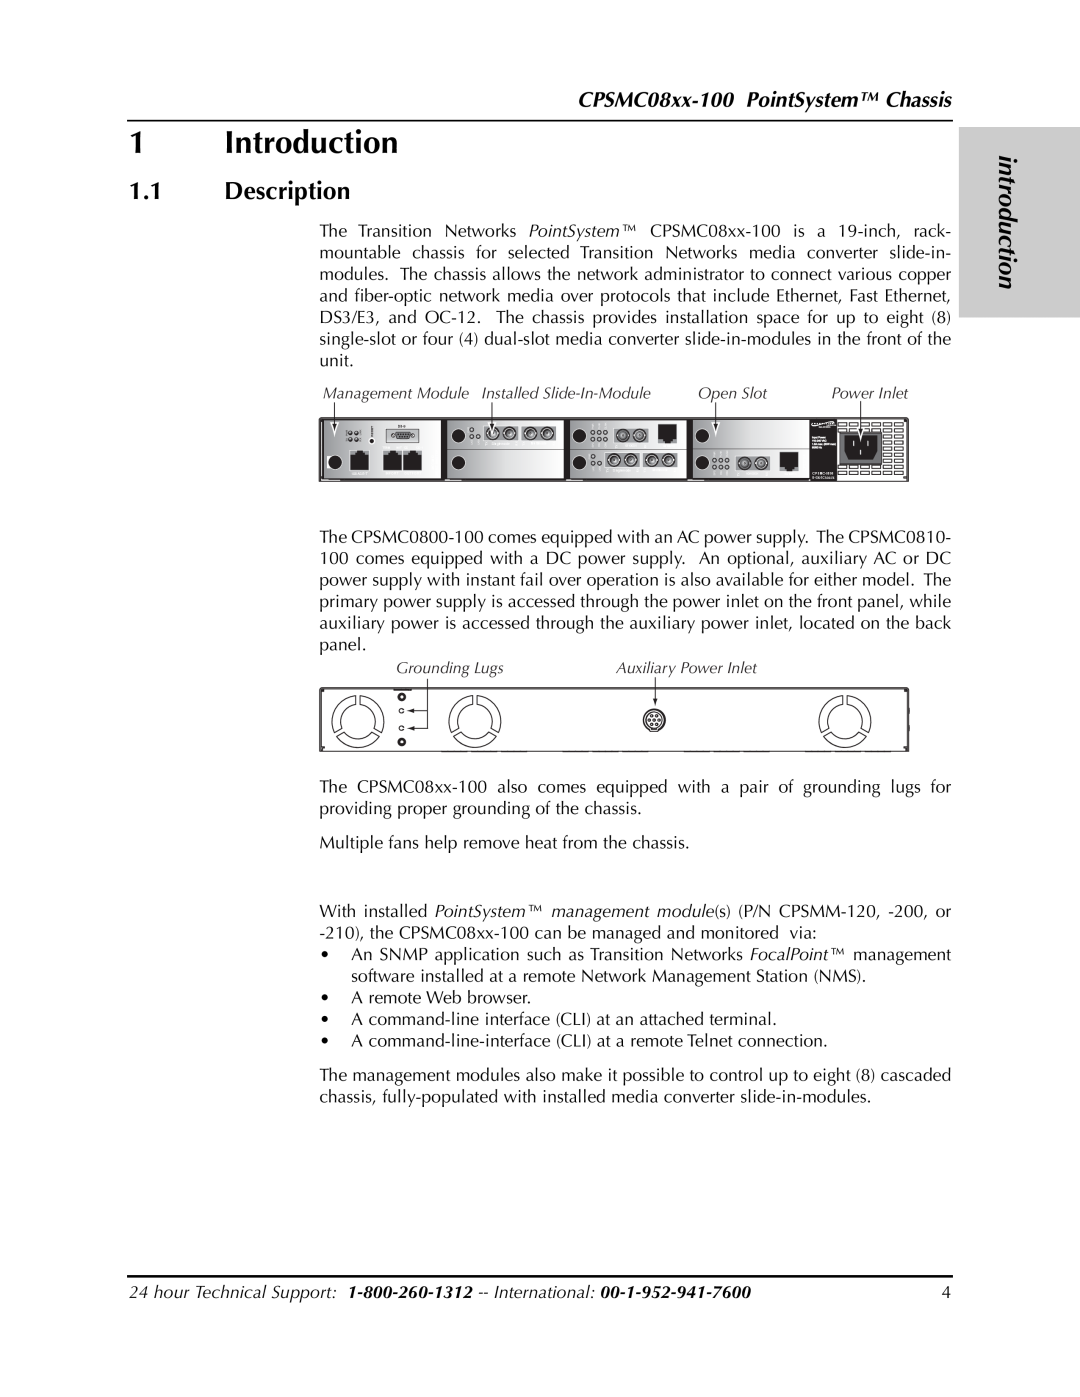 Transition Networks CPSMC0800-100, CPSMC0810-100 manual Introduction, Description, CPSMC08xx-100 PointSystem Chassis 